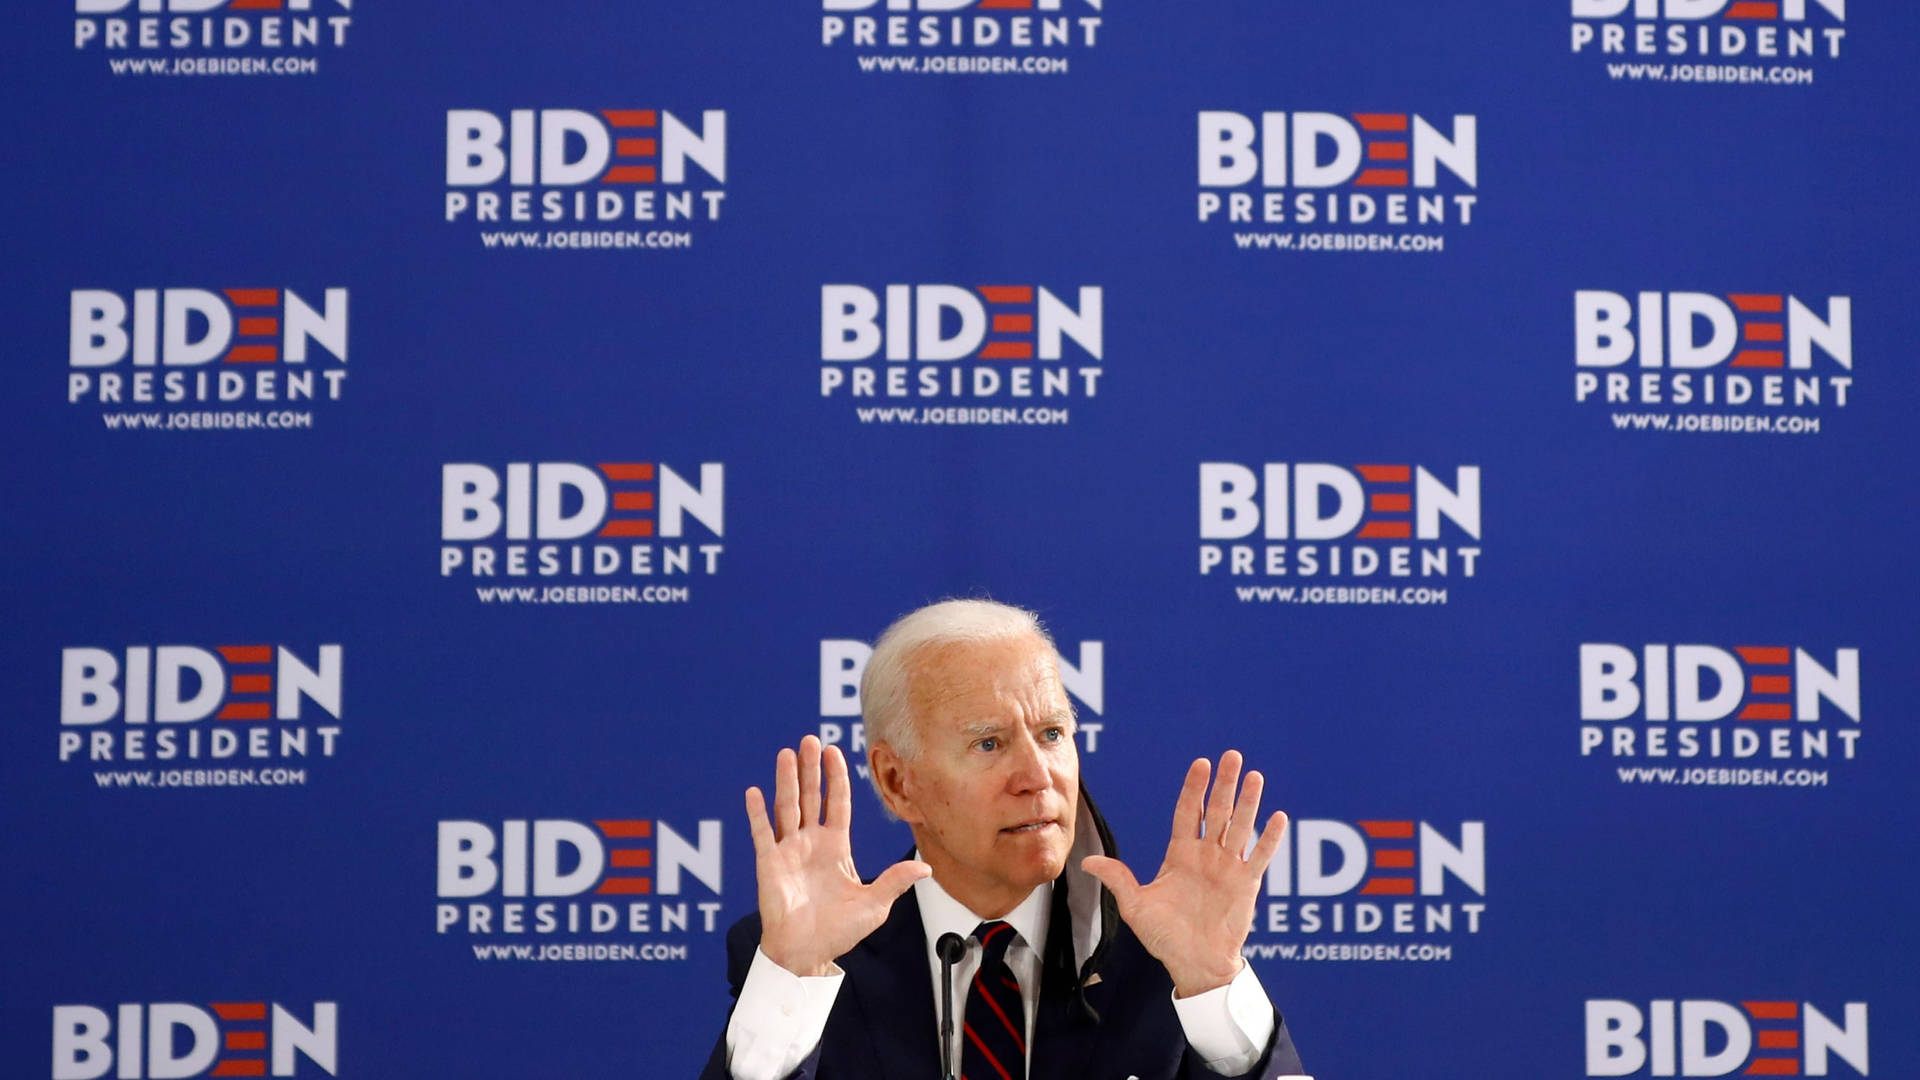 Vice President Joe Biden Delivering An Inspirational Speech Background